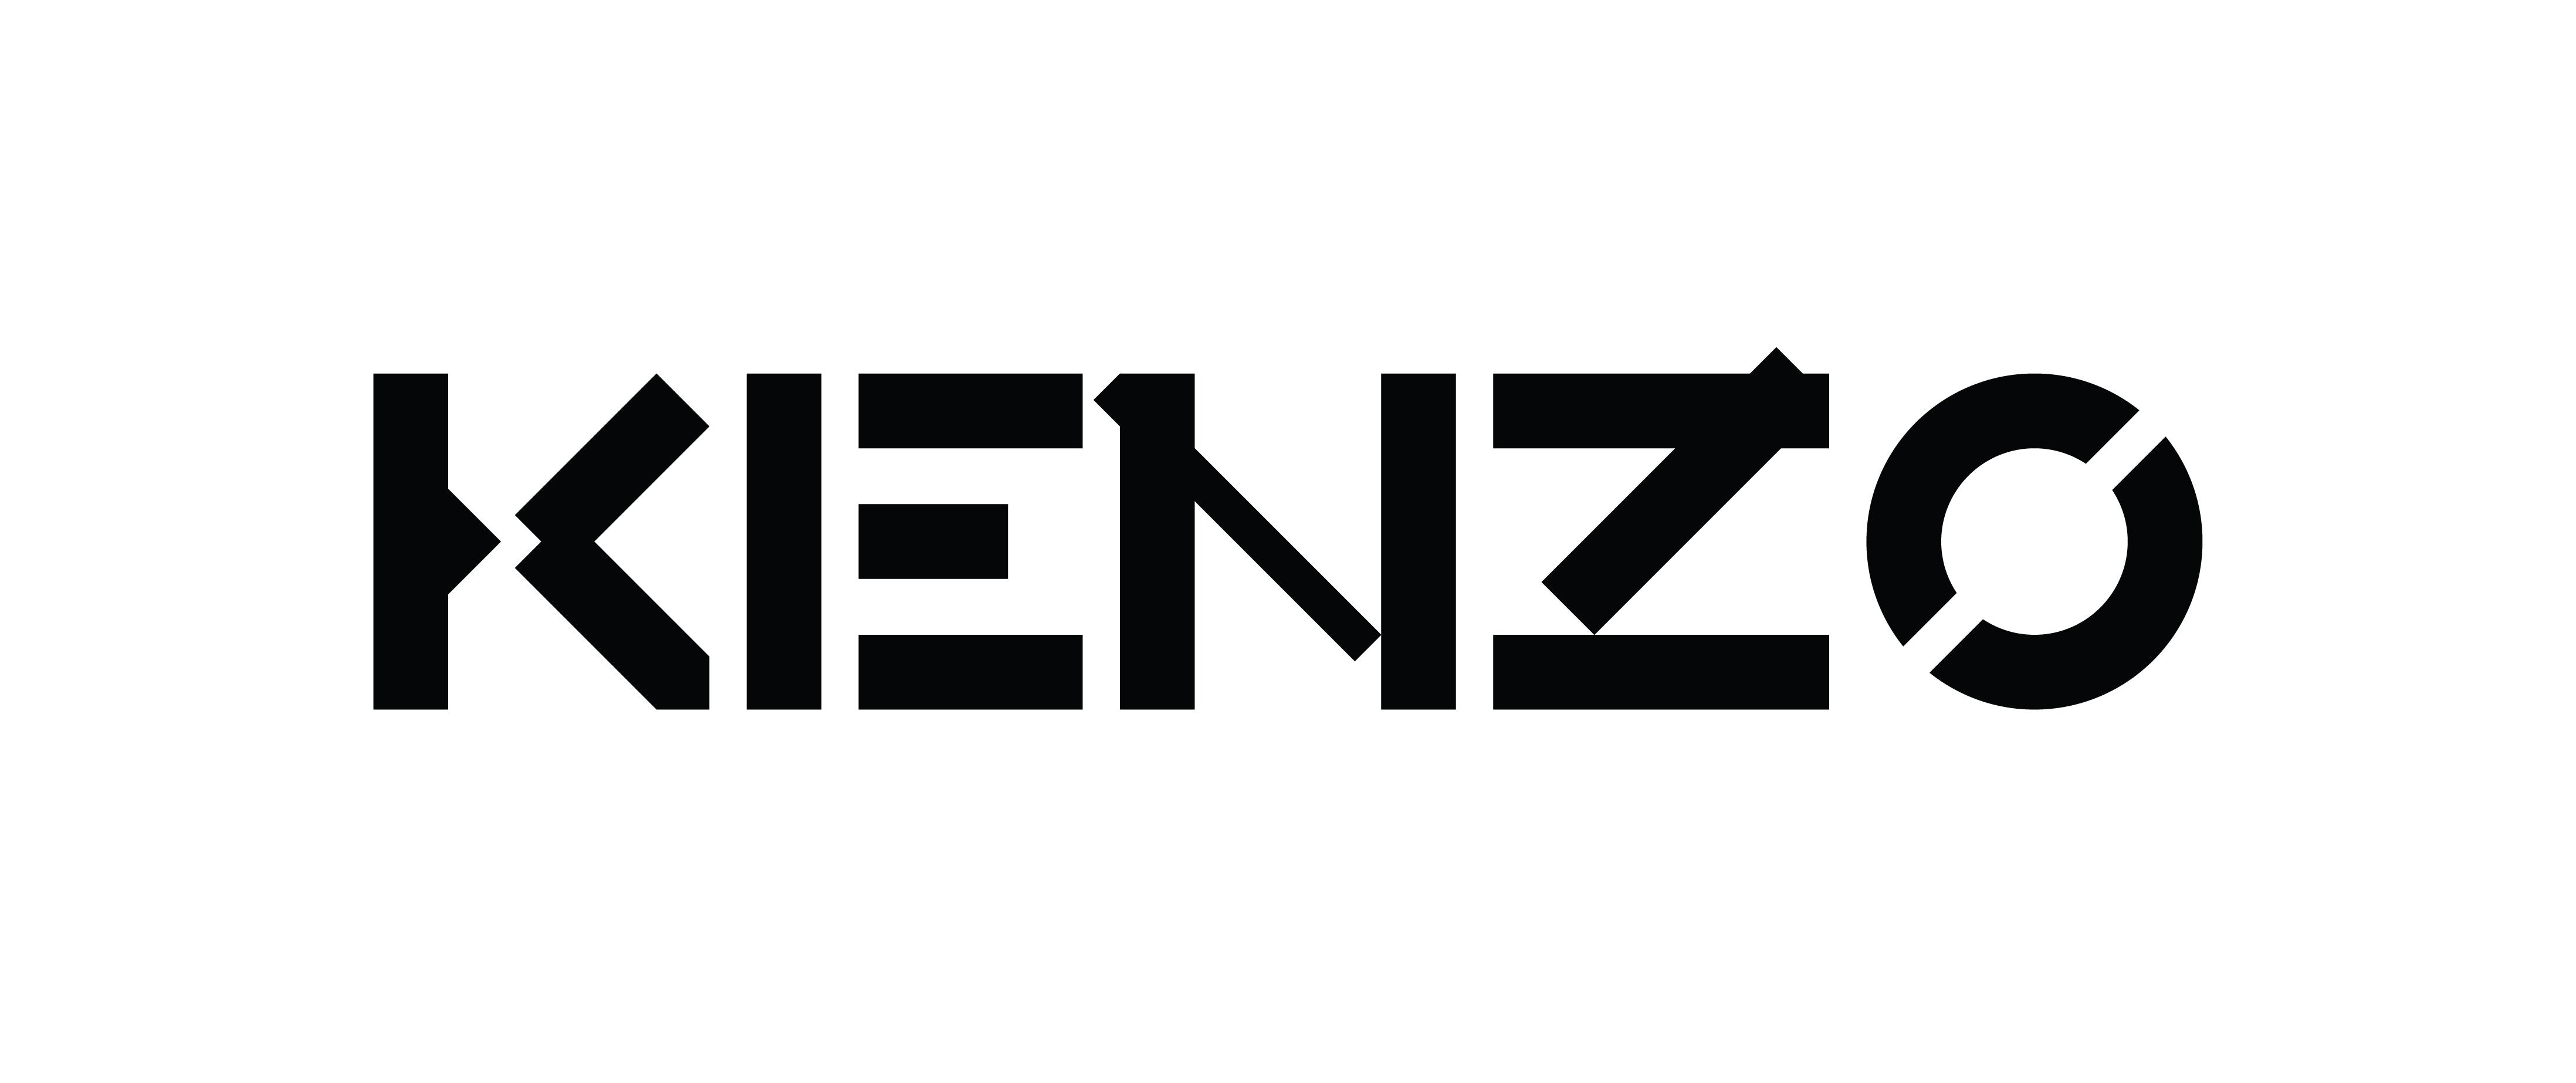 tin thời trang logo kenzo